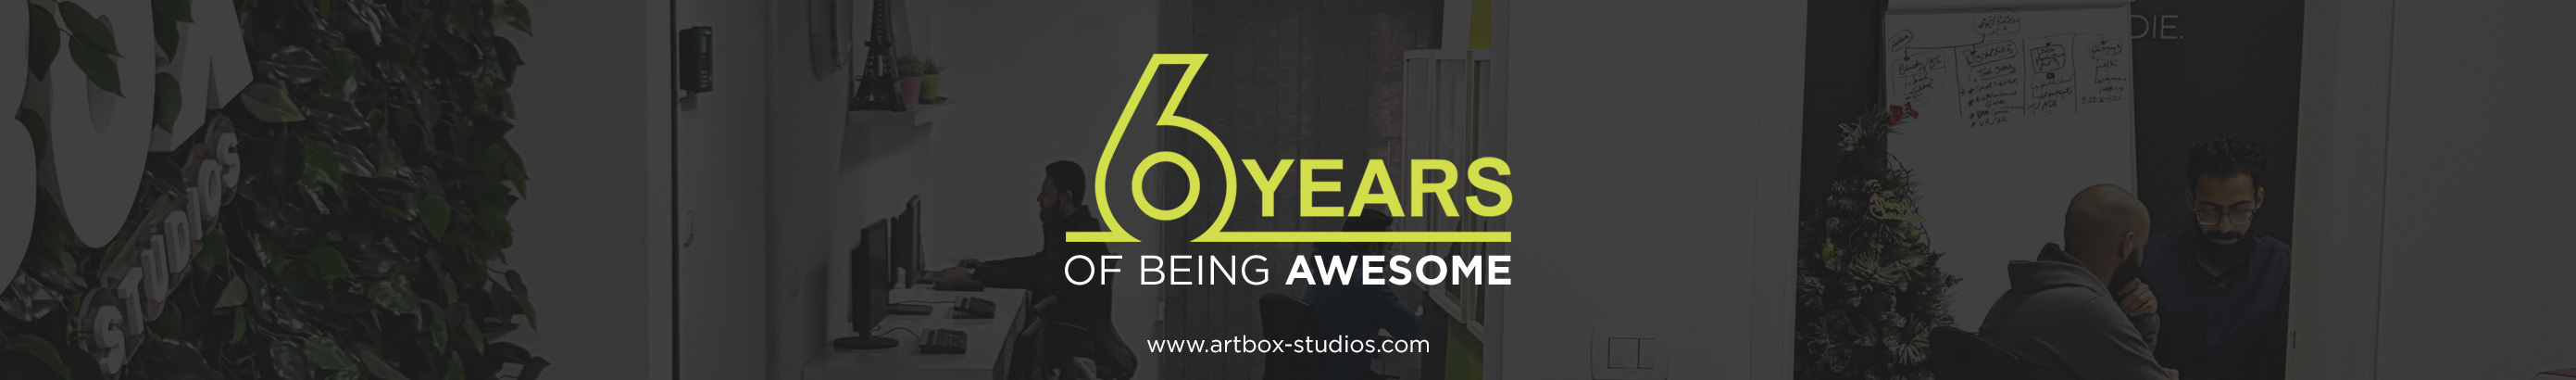 Artbox Studios's profile banner